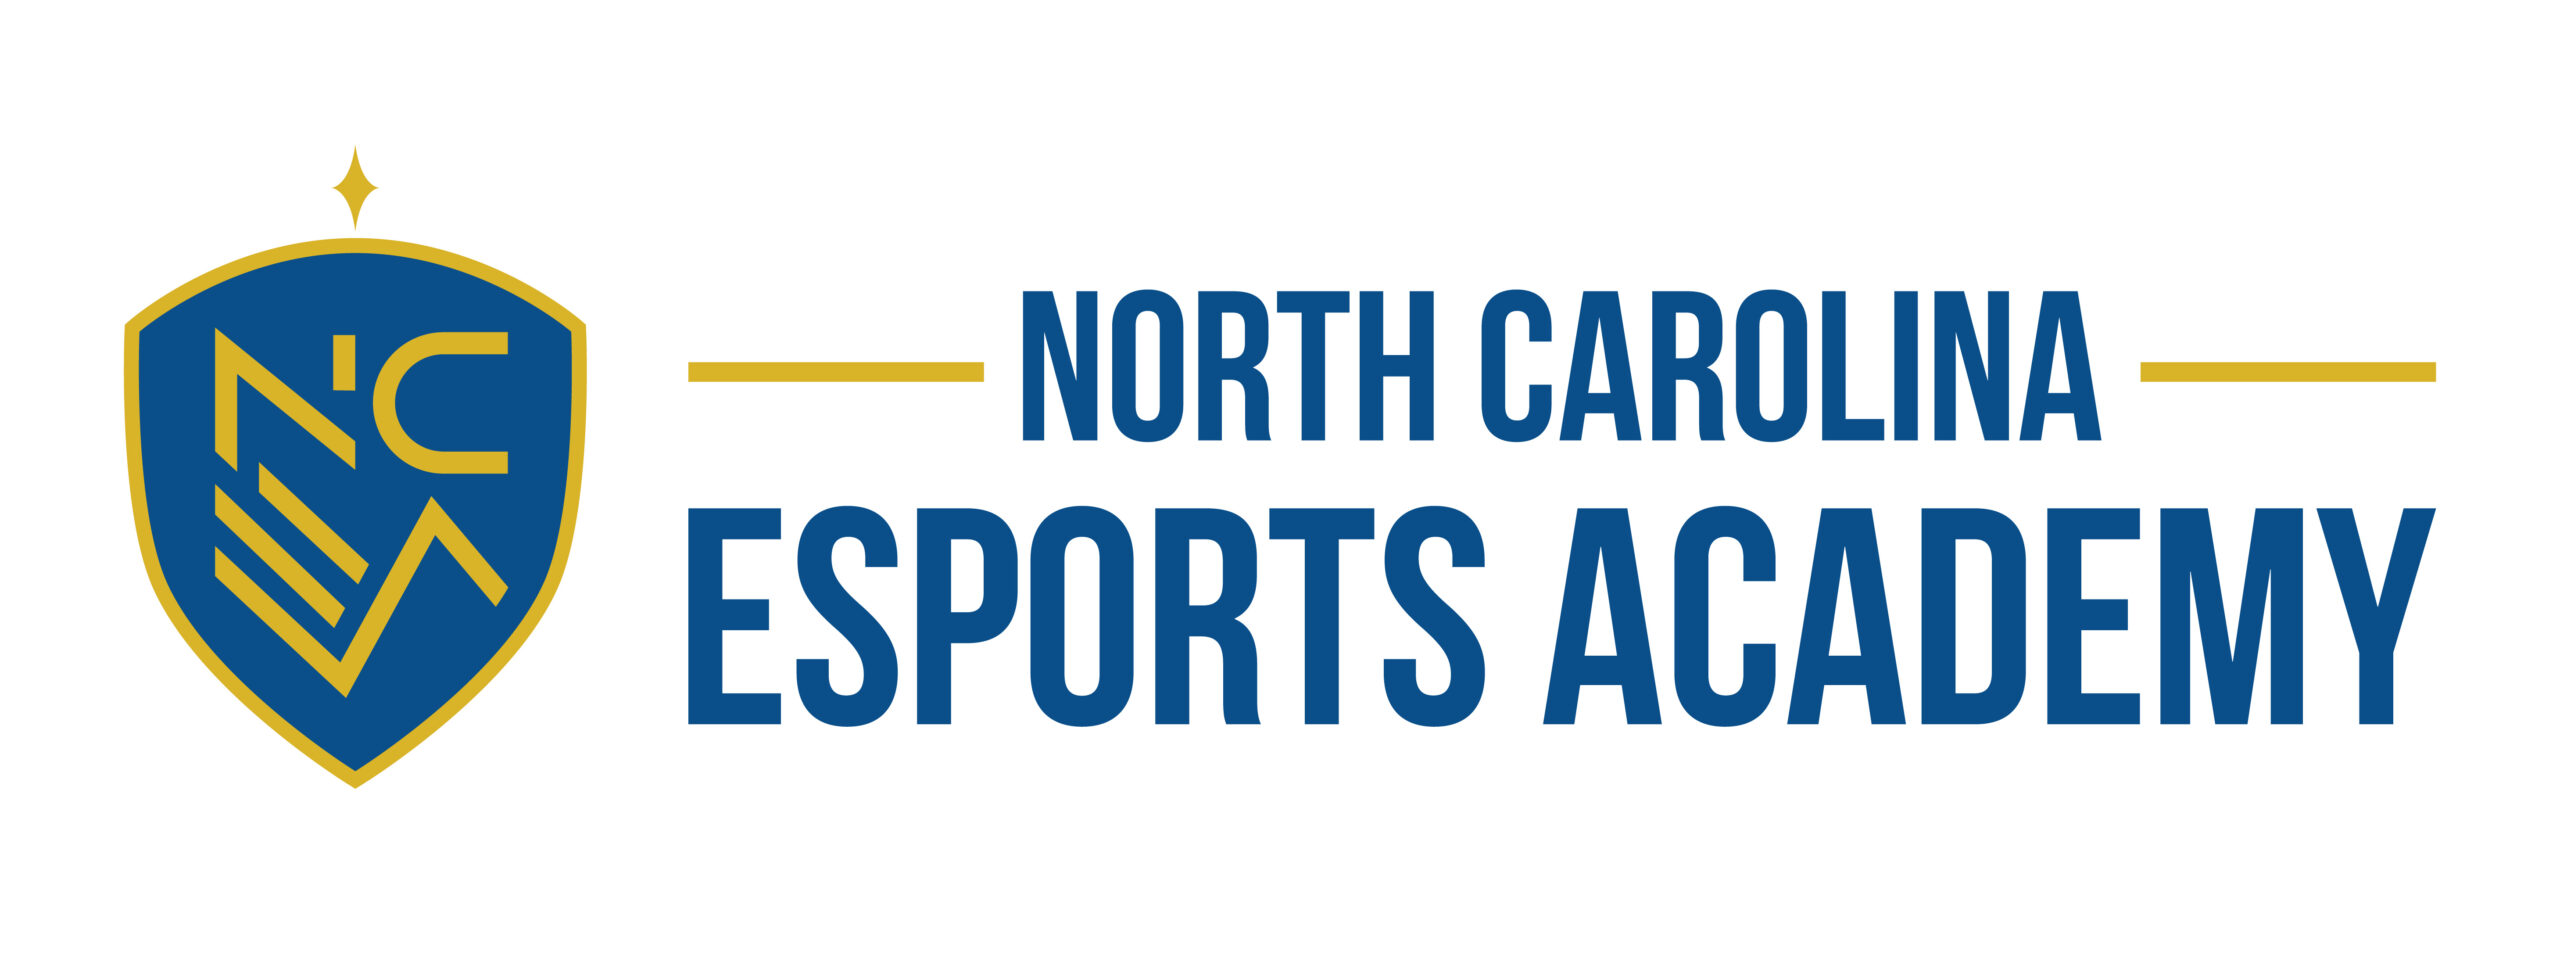 NC Esports Academy